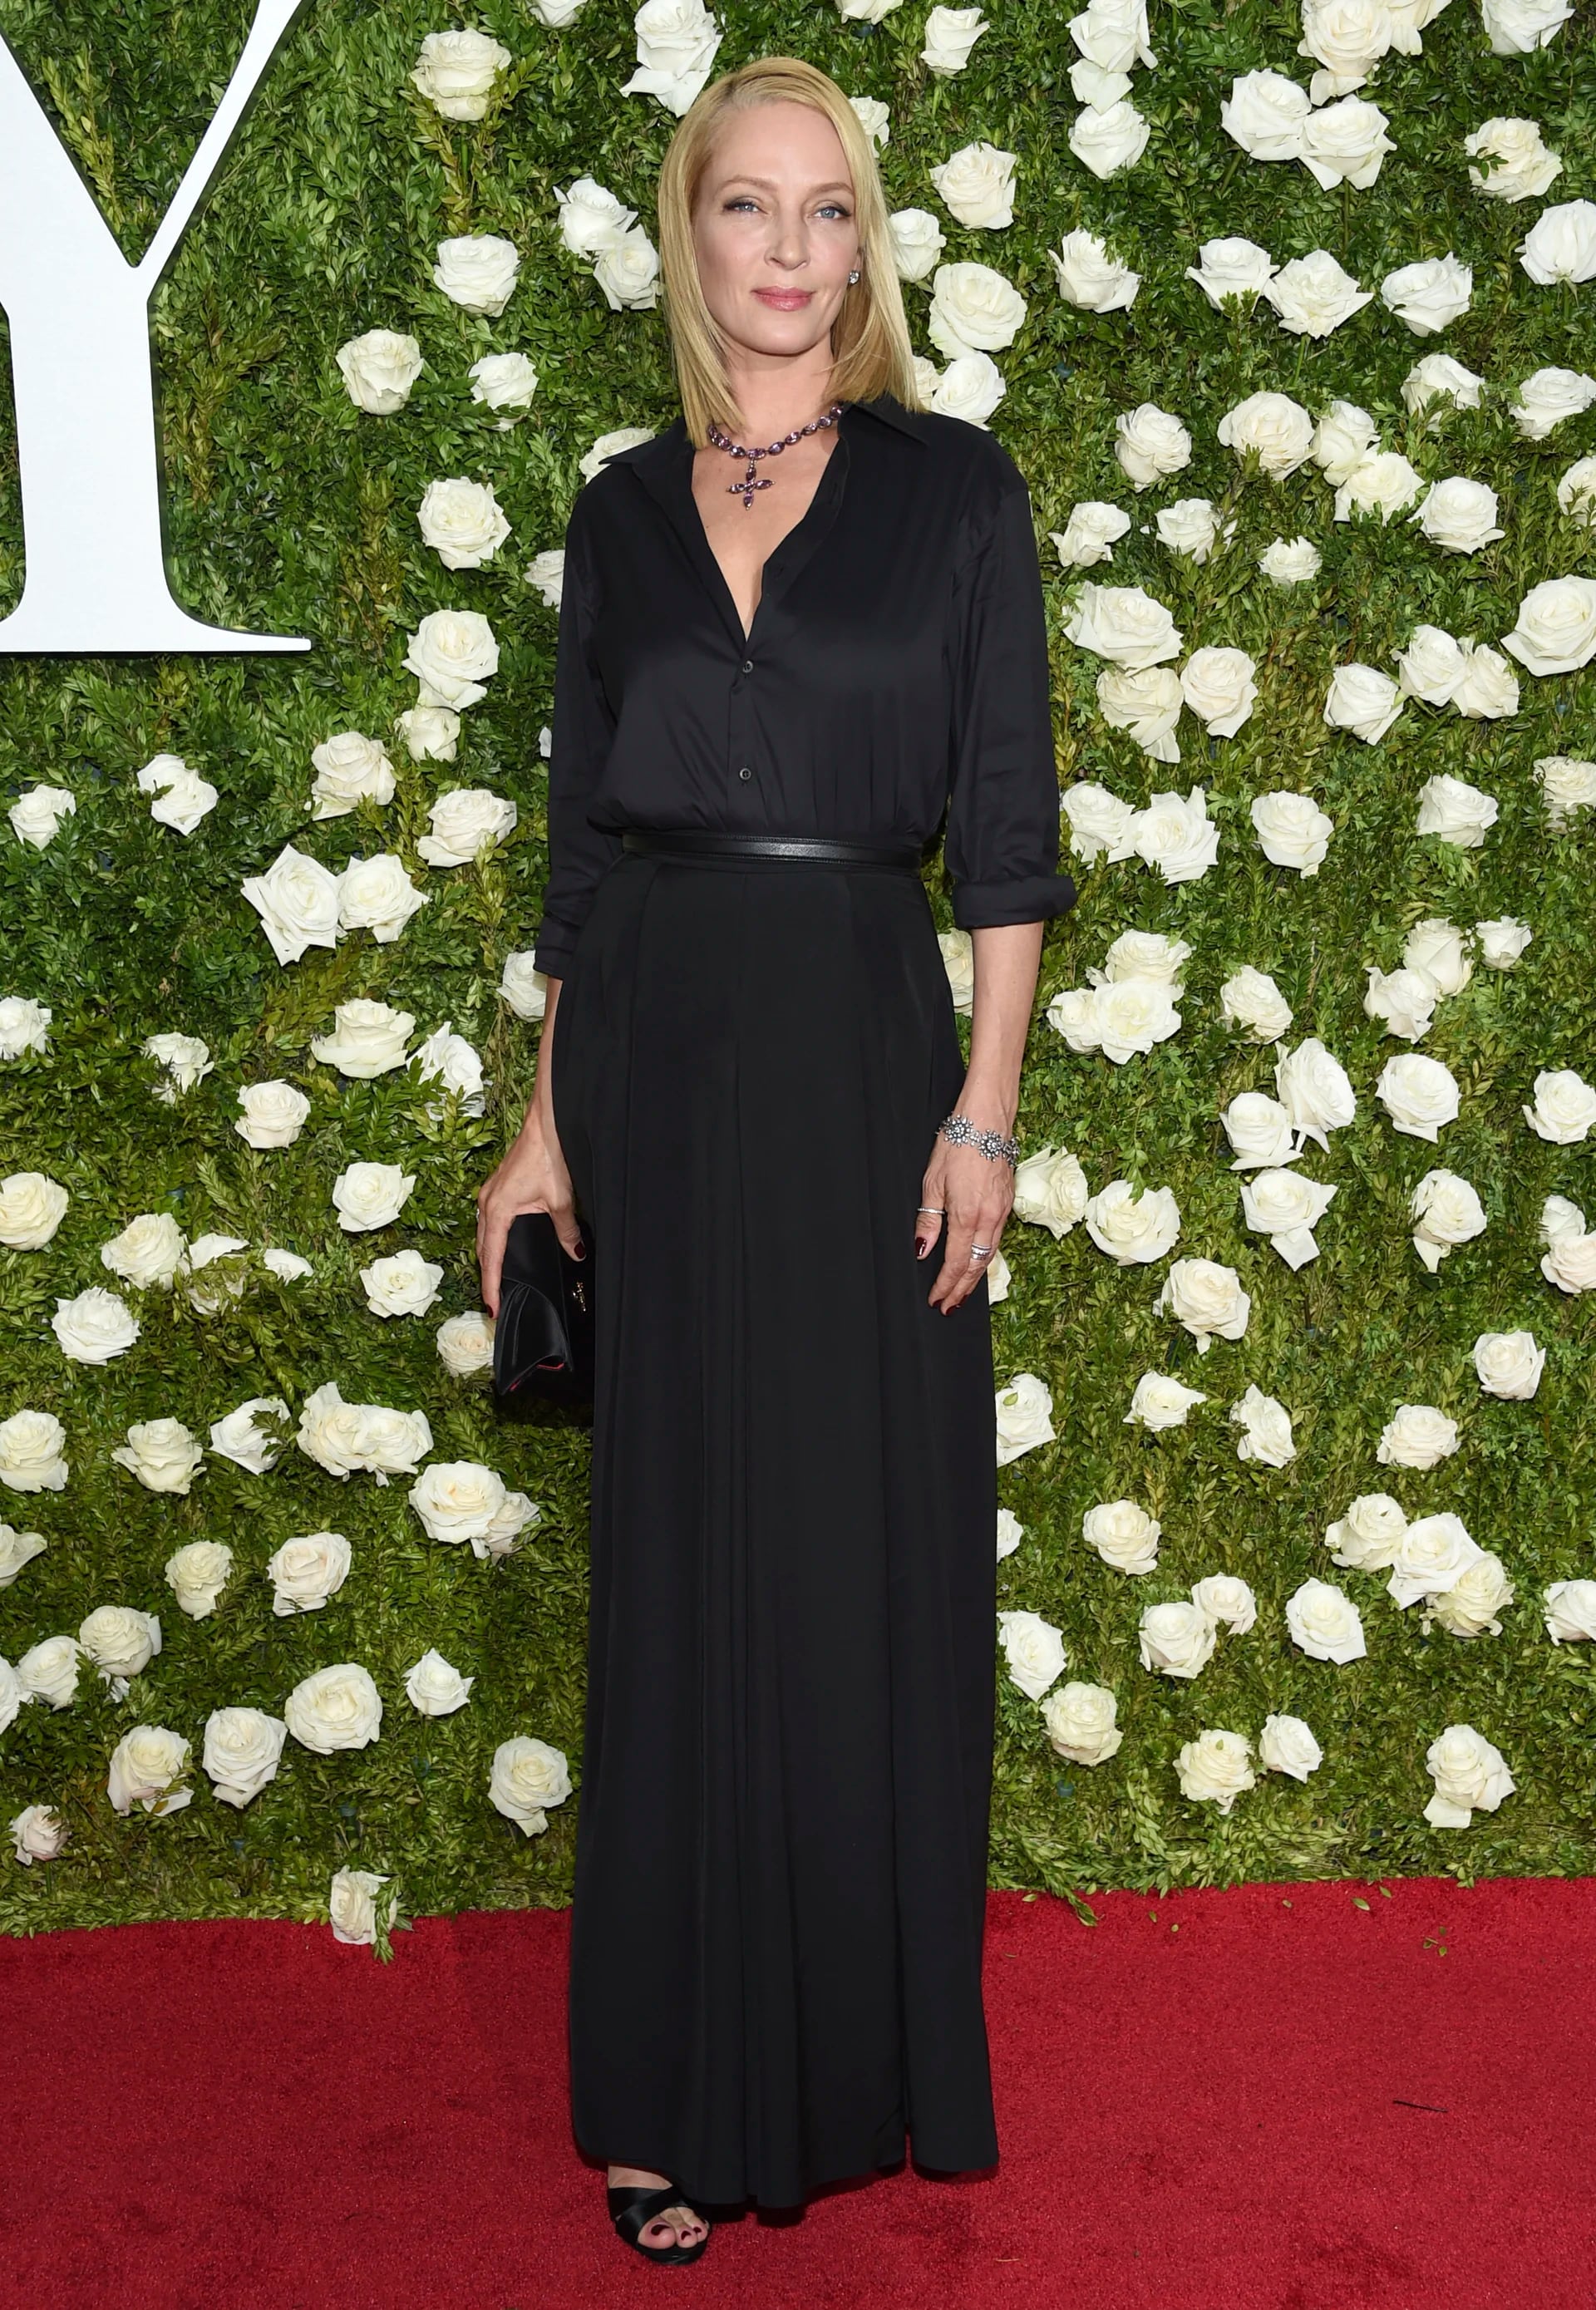 La mítica Uma Thurman eligió para la red carpet un look total black de pollera y camisa